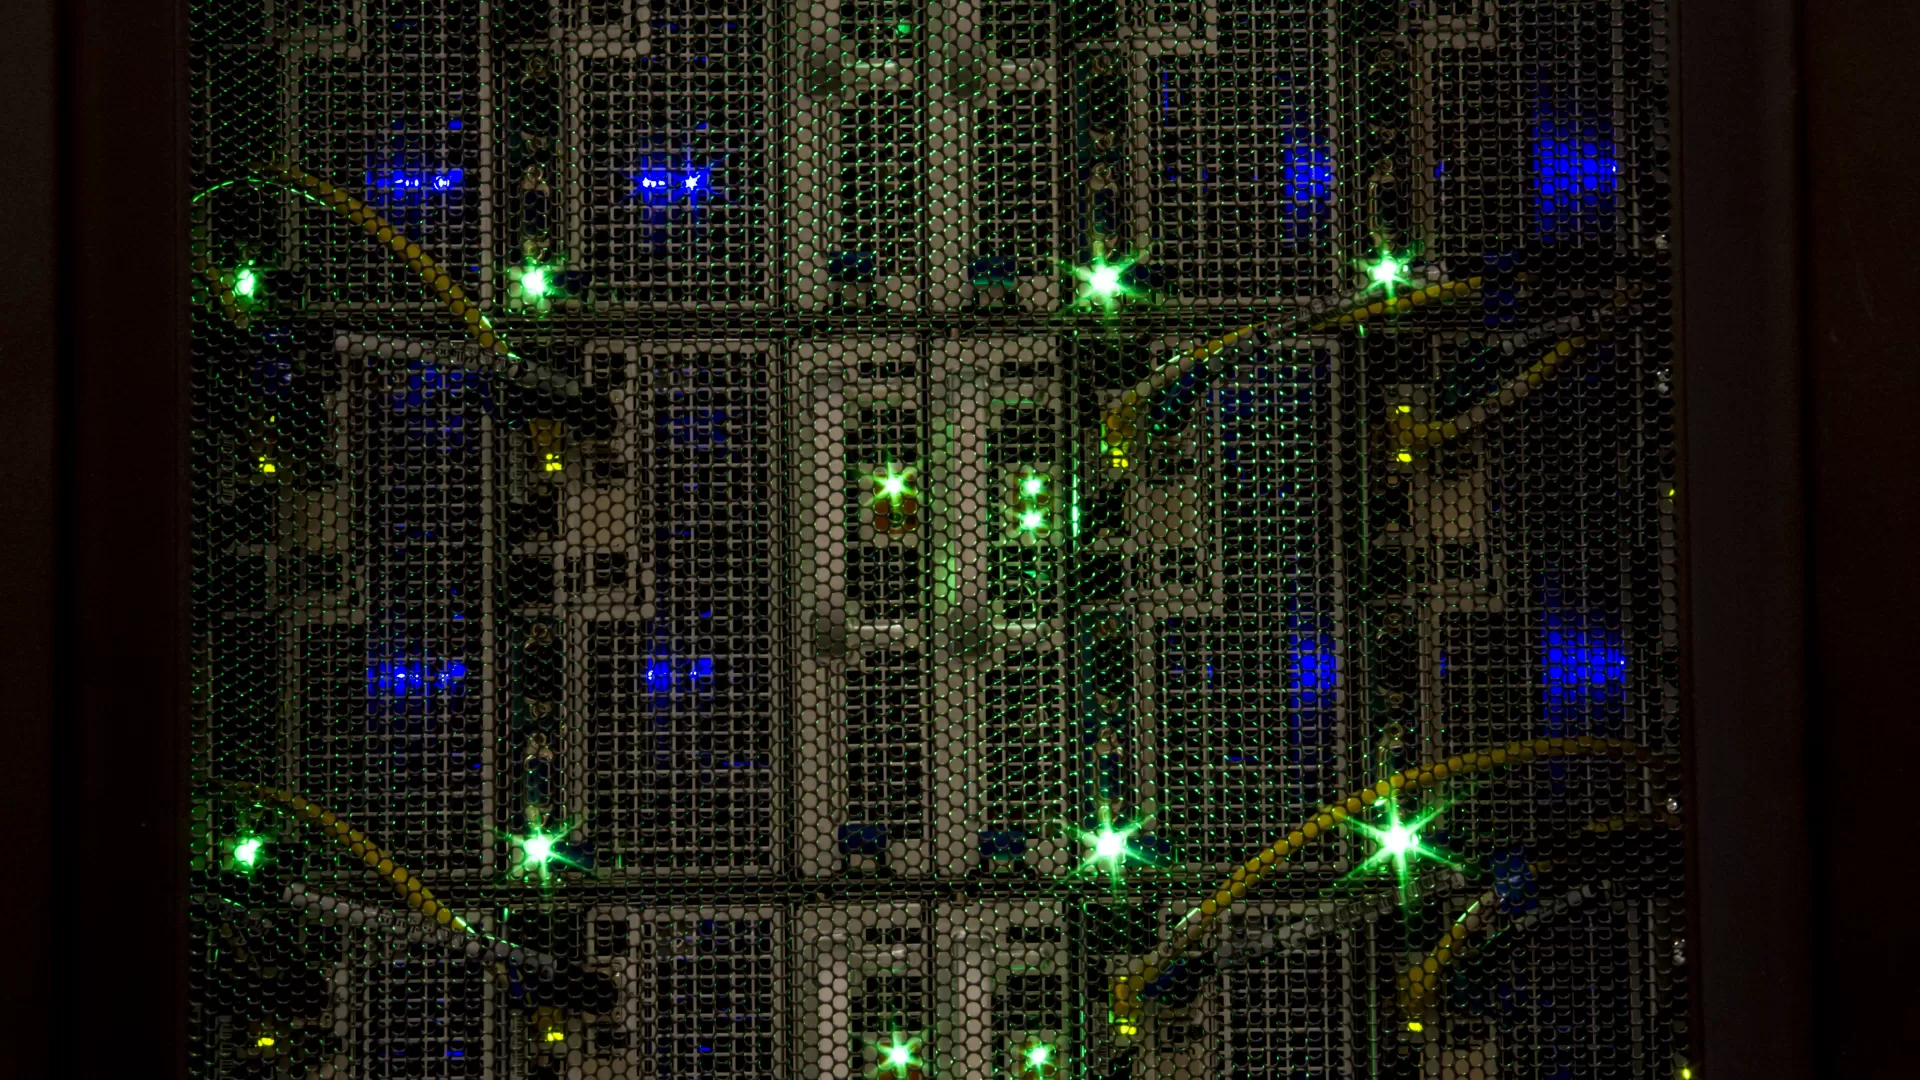 Stampede supercomputer